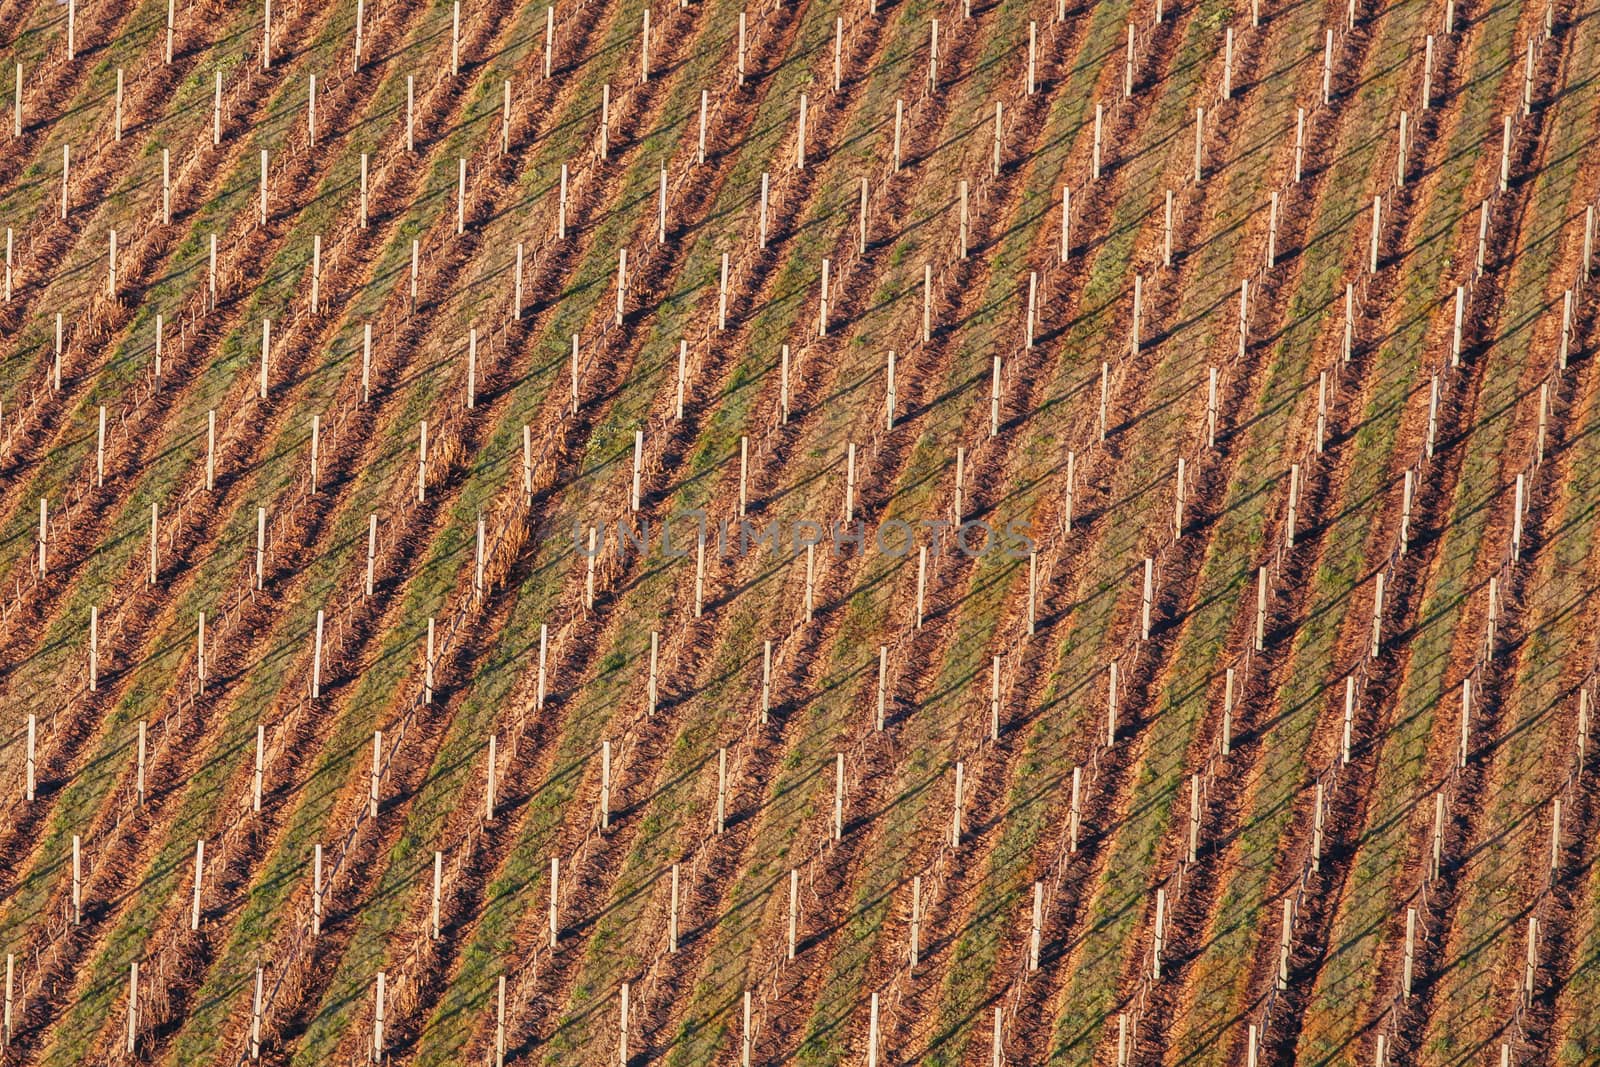 Rows of vines in a vineyard in the Yarra Valley in Victoria, Australia